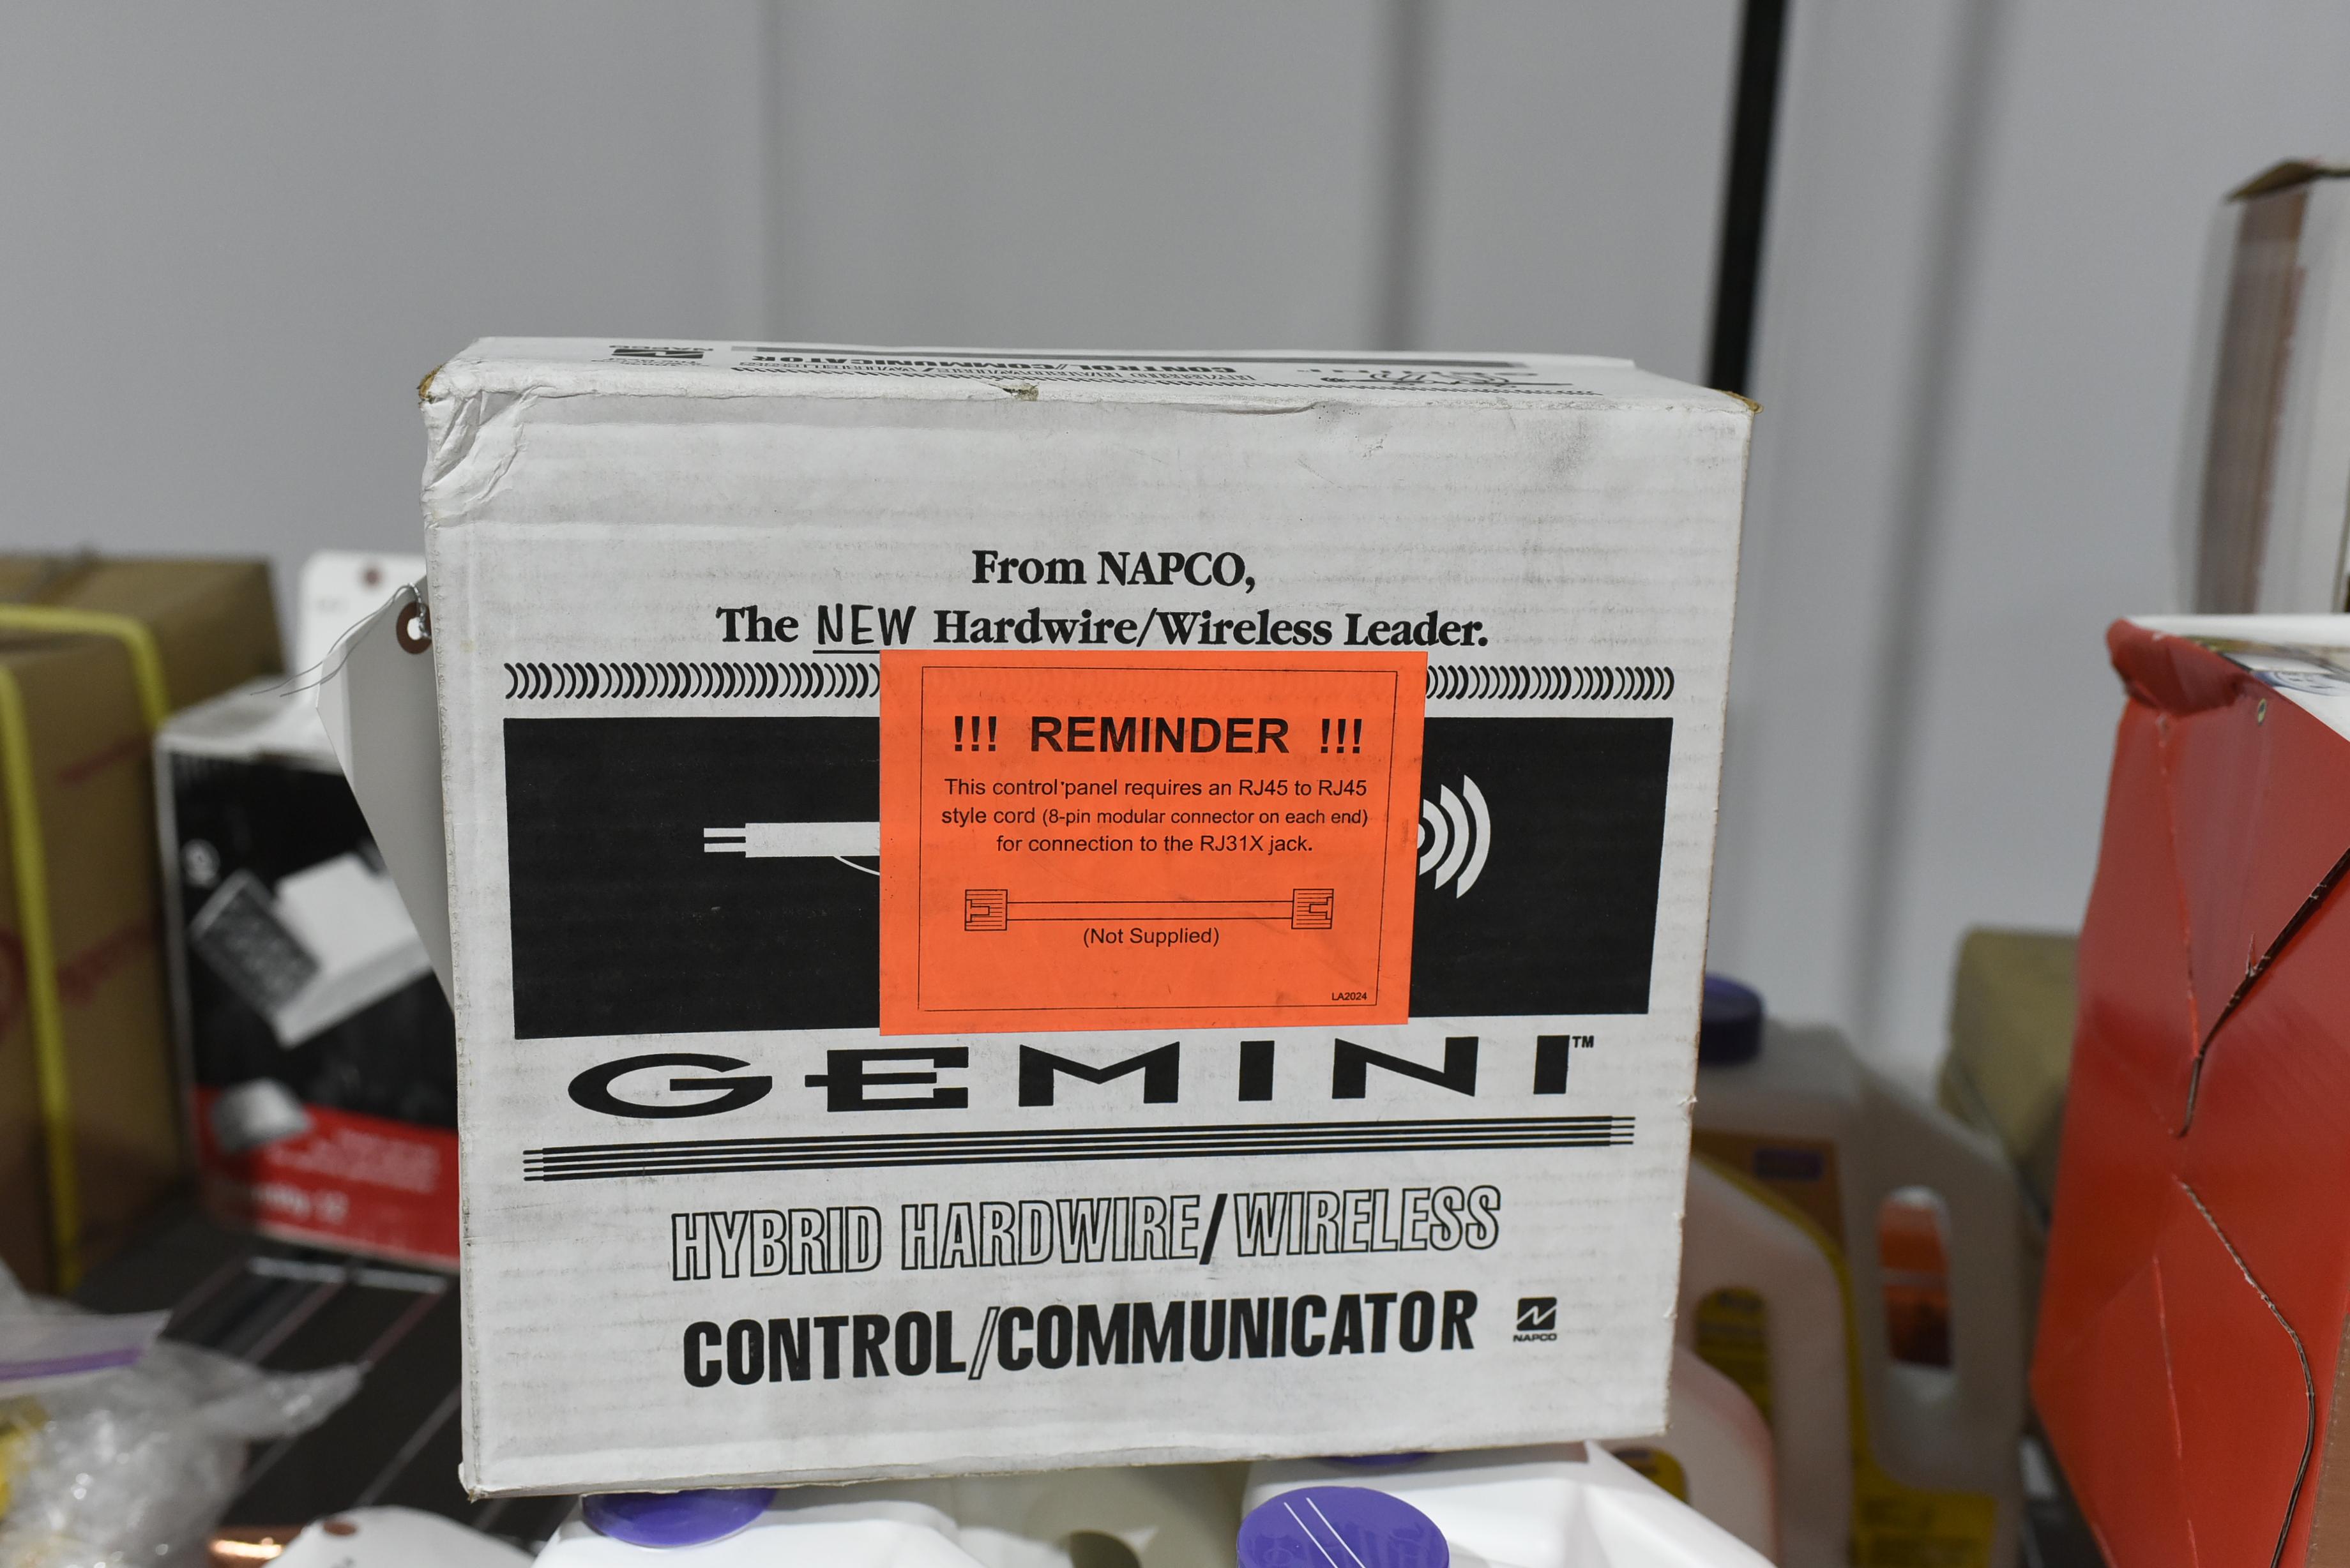 Gemini Hybrid Hardware/Wireless Control/Communicator GEM-P801 64942